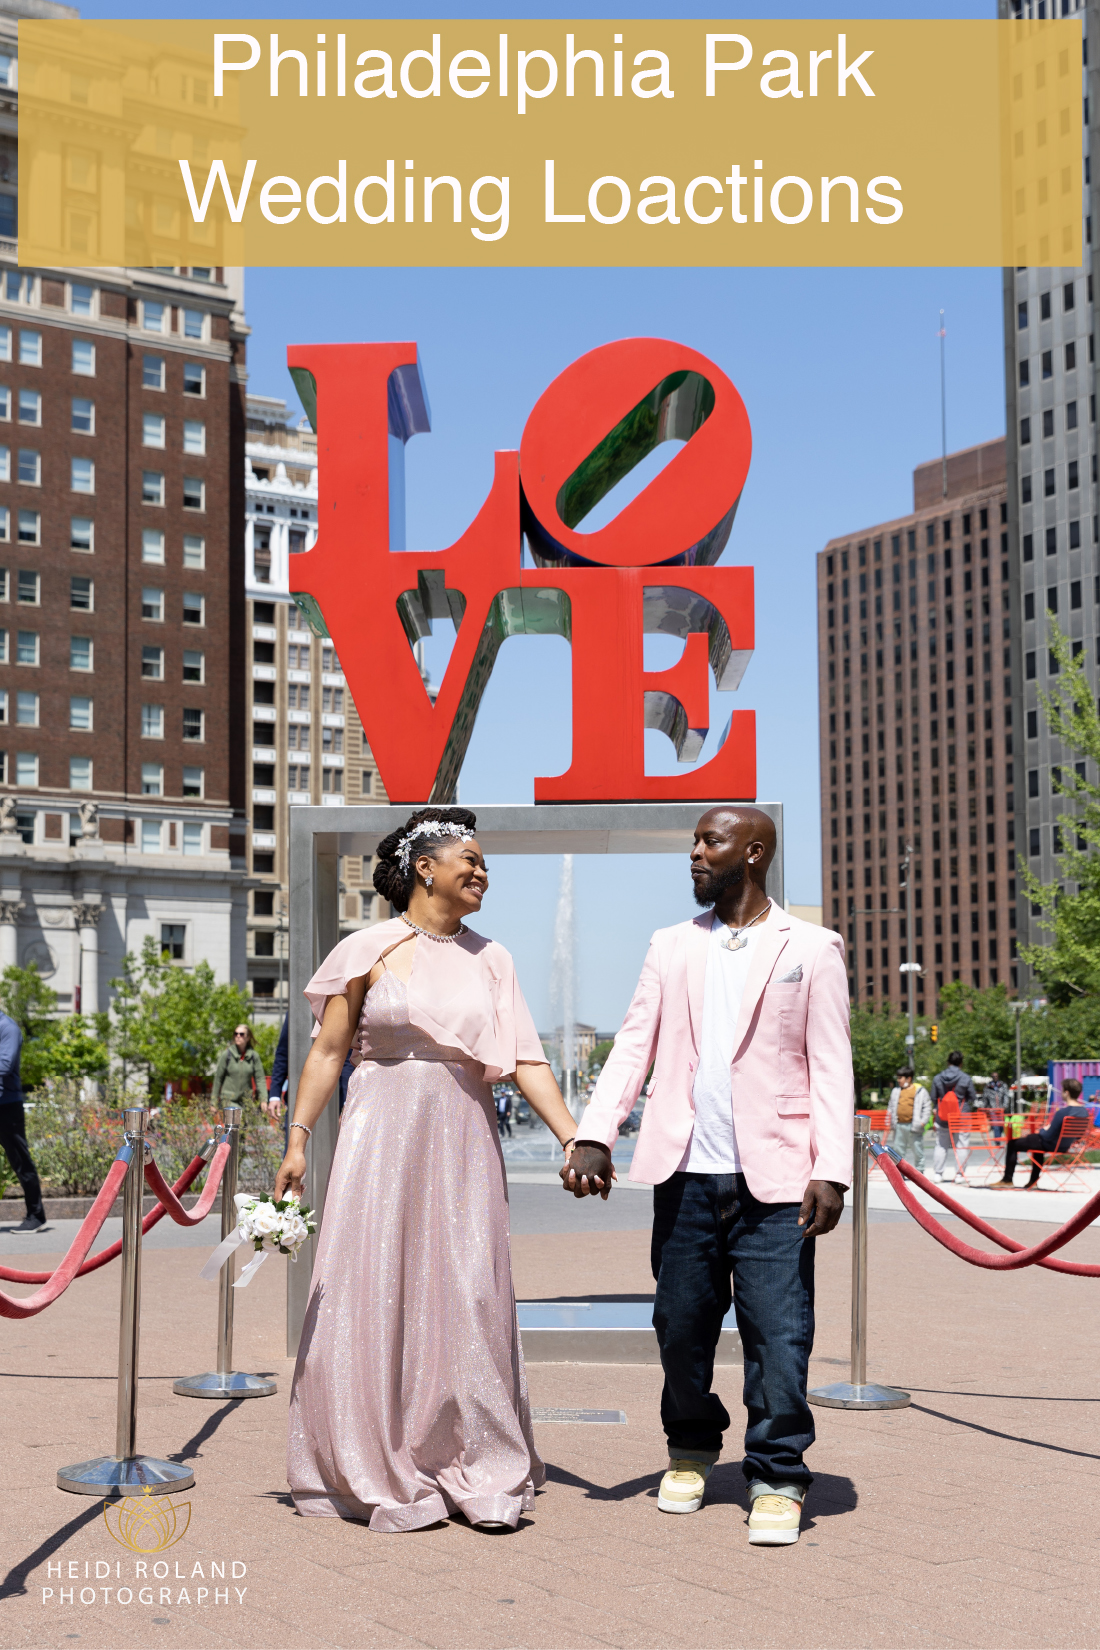 Philadelphia Park wedding locations